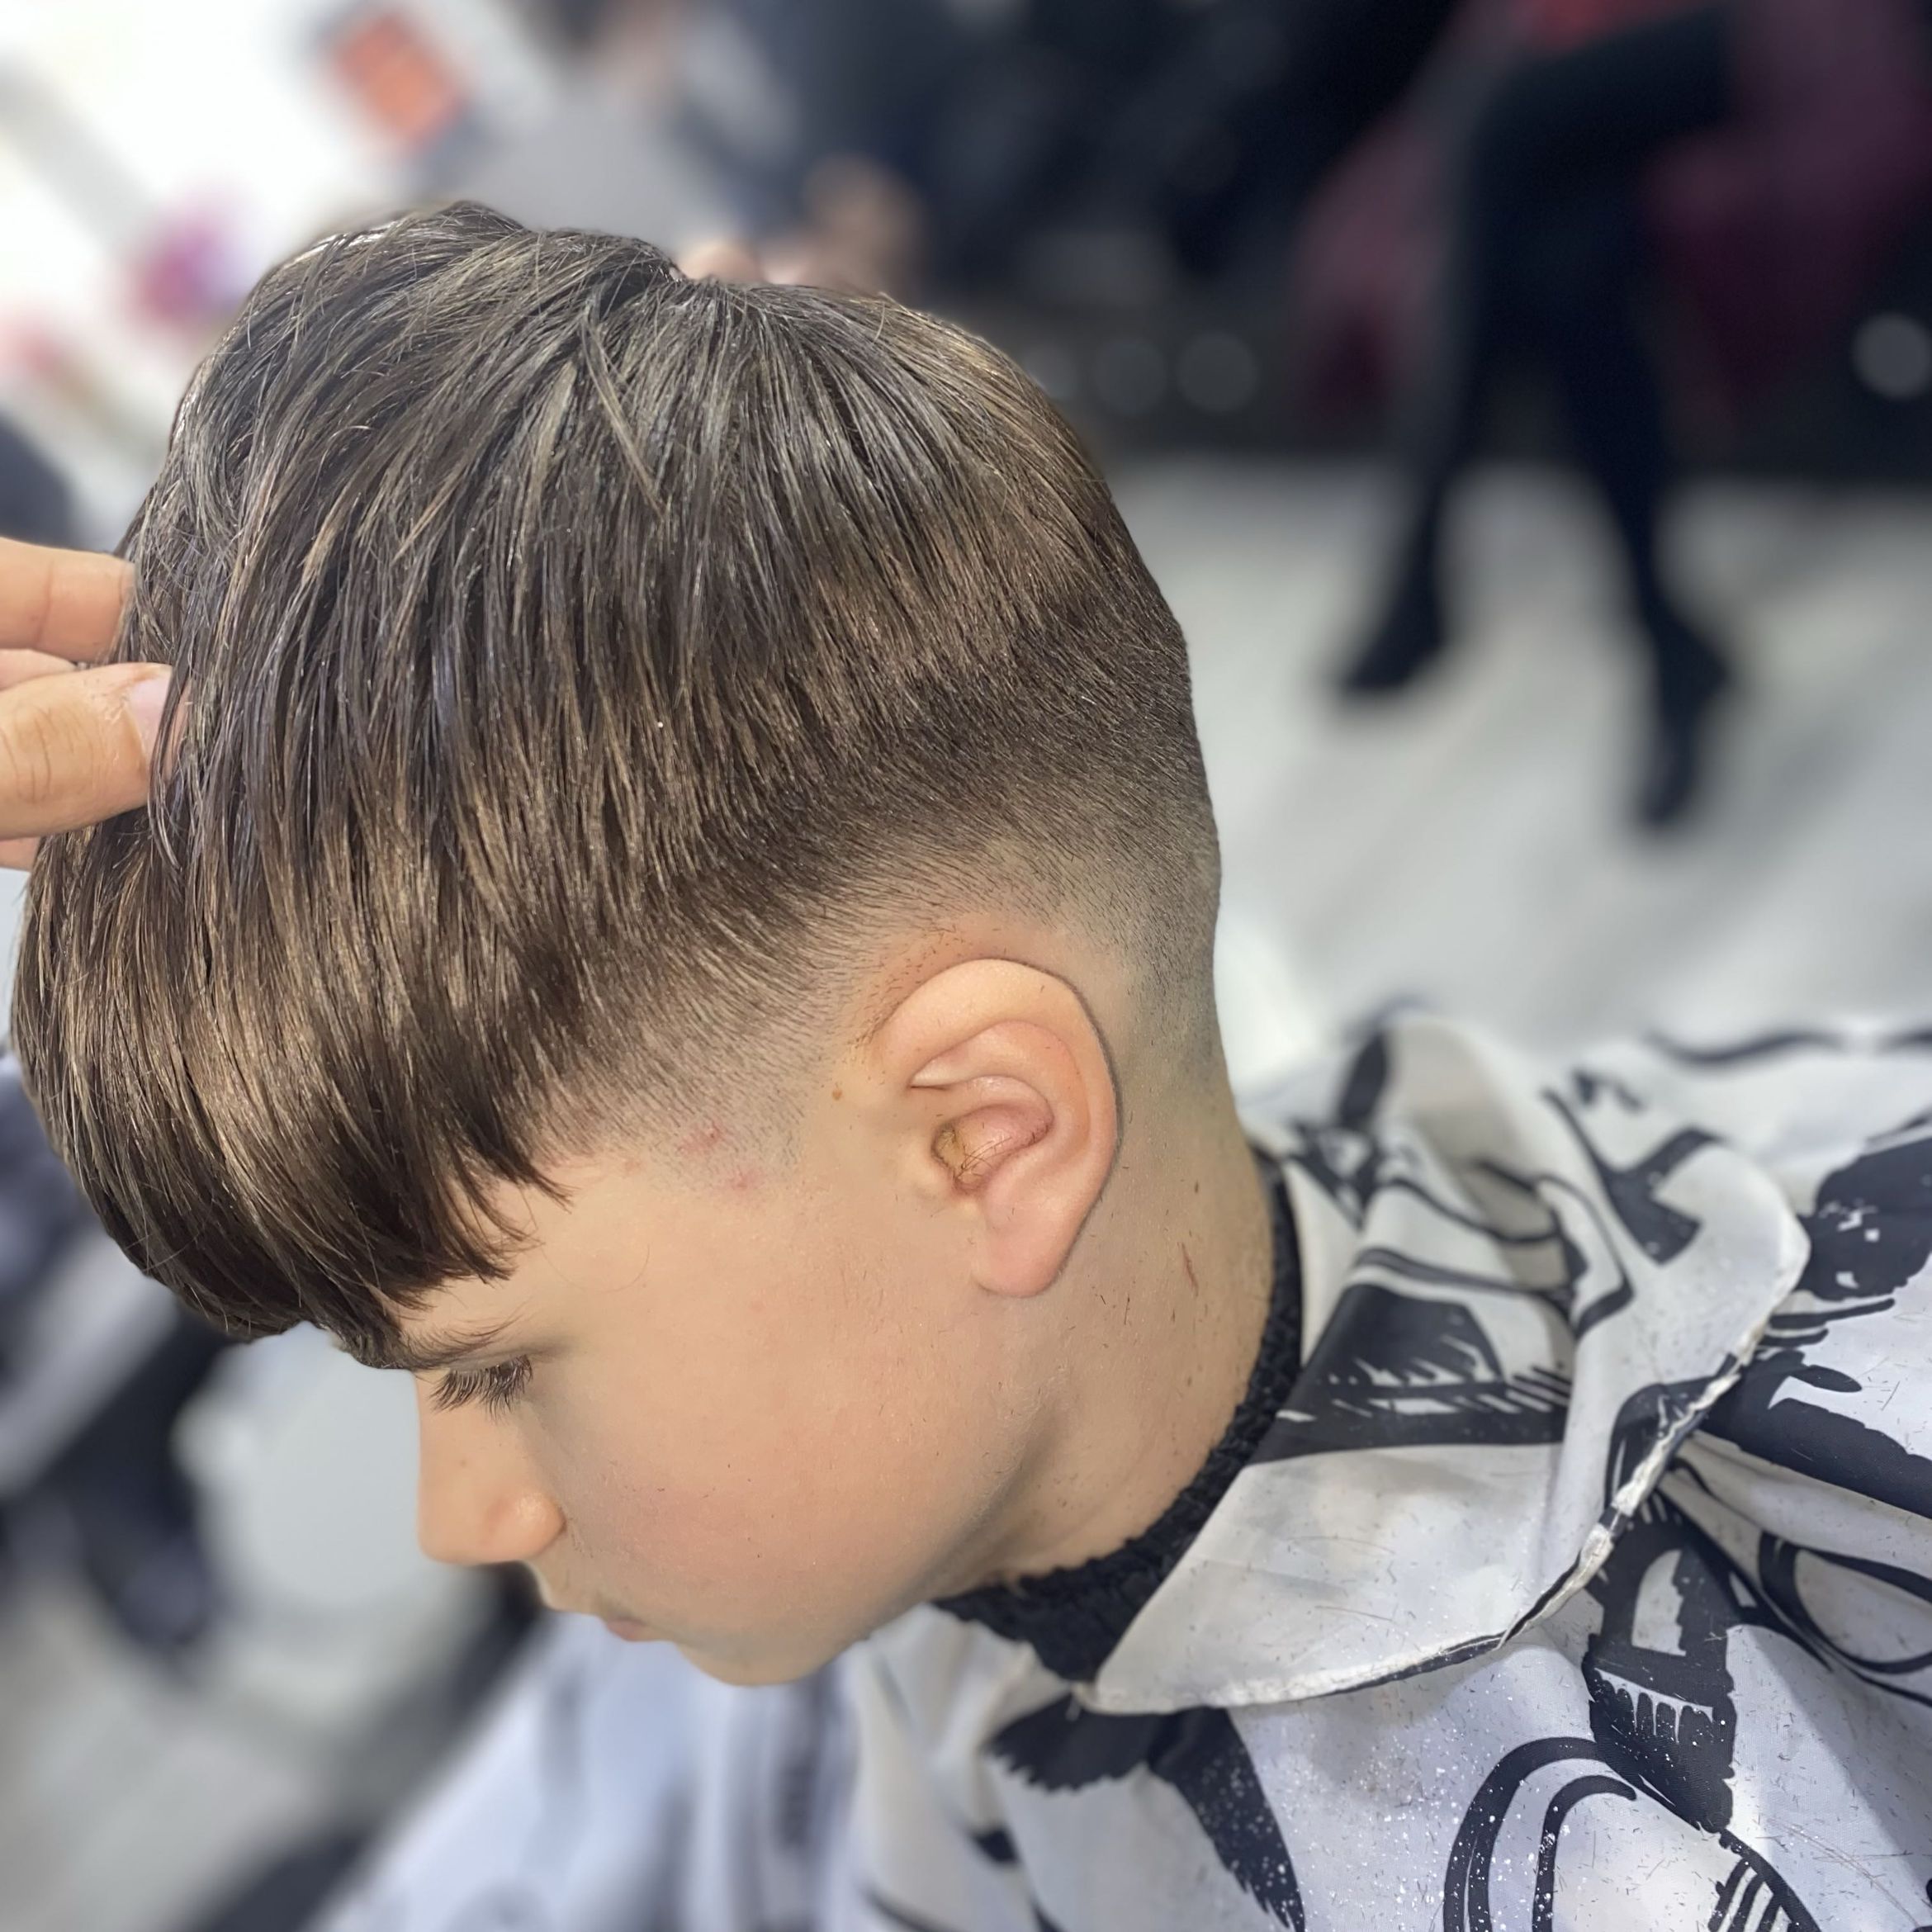 Haircut kids under 10 portfolio